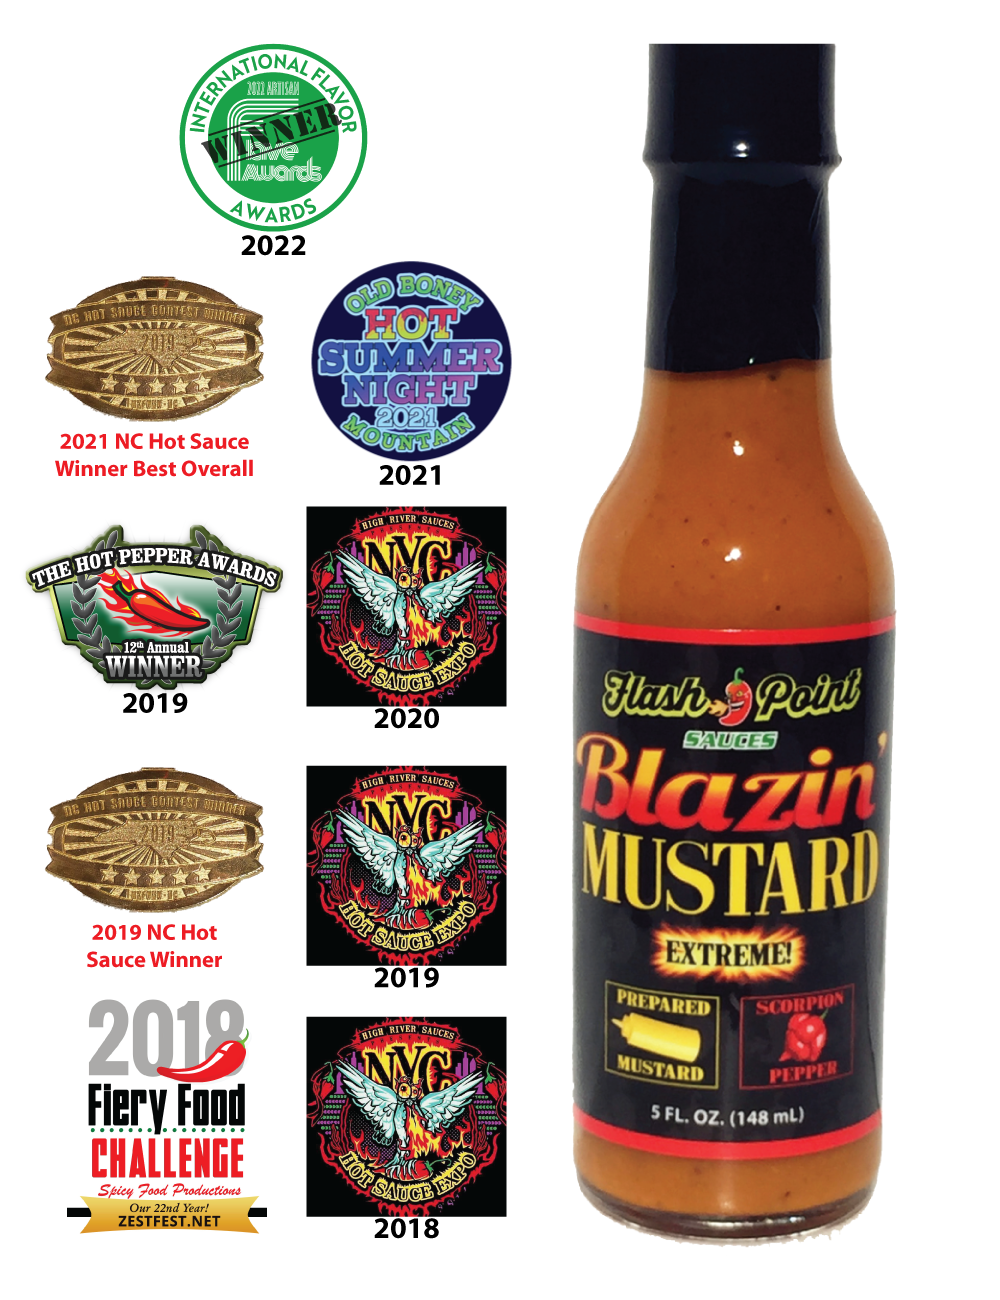 Blazin' Mustard - 5 OZ Bottle Price